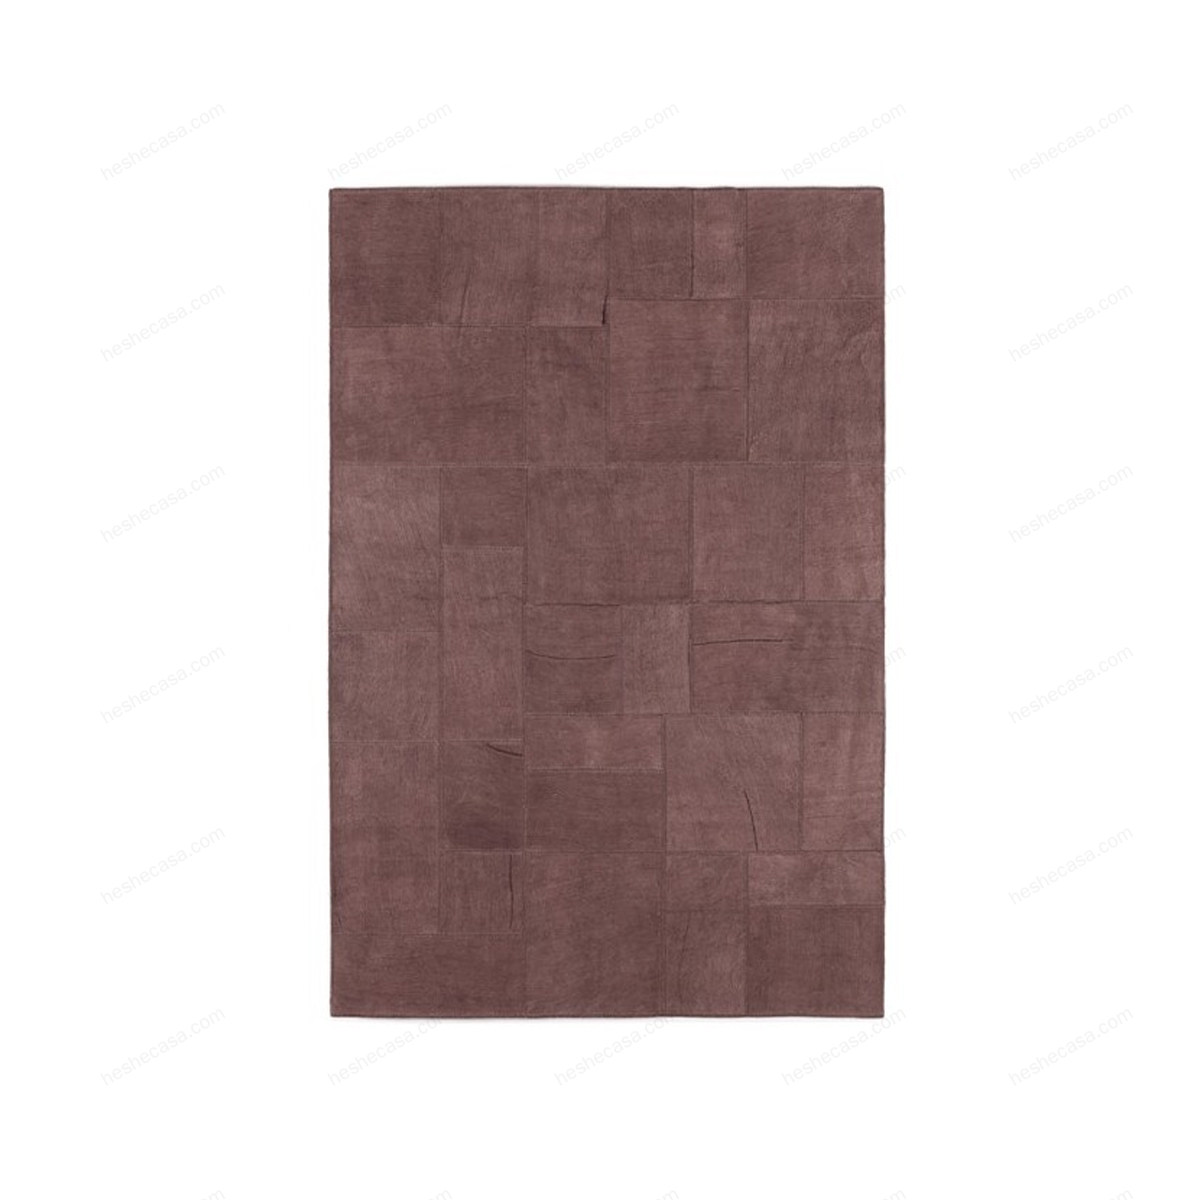 Milano Brown地毯